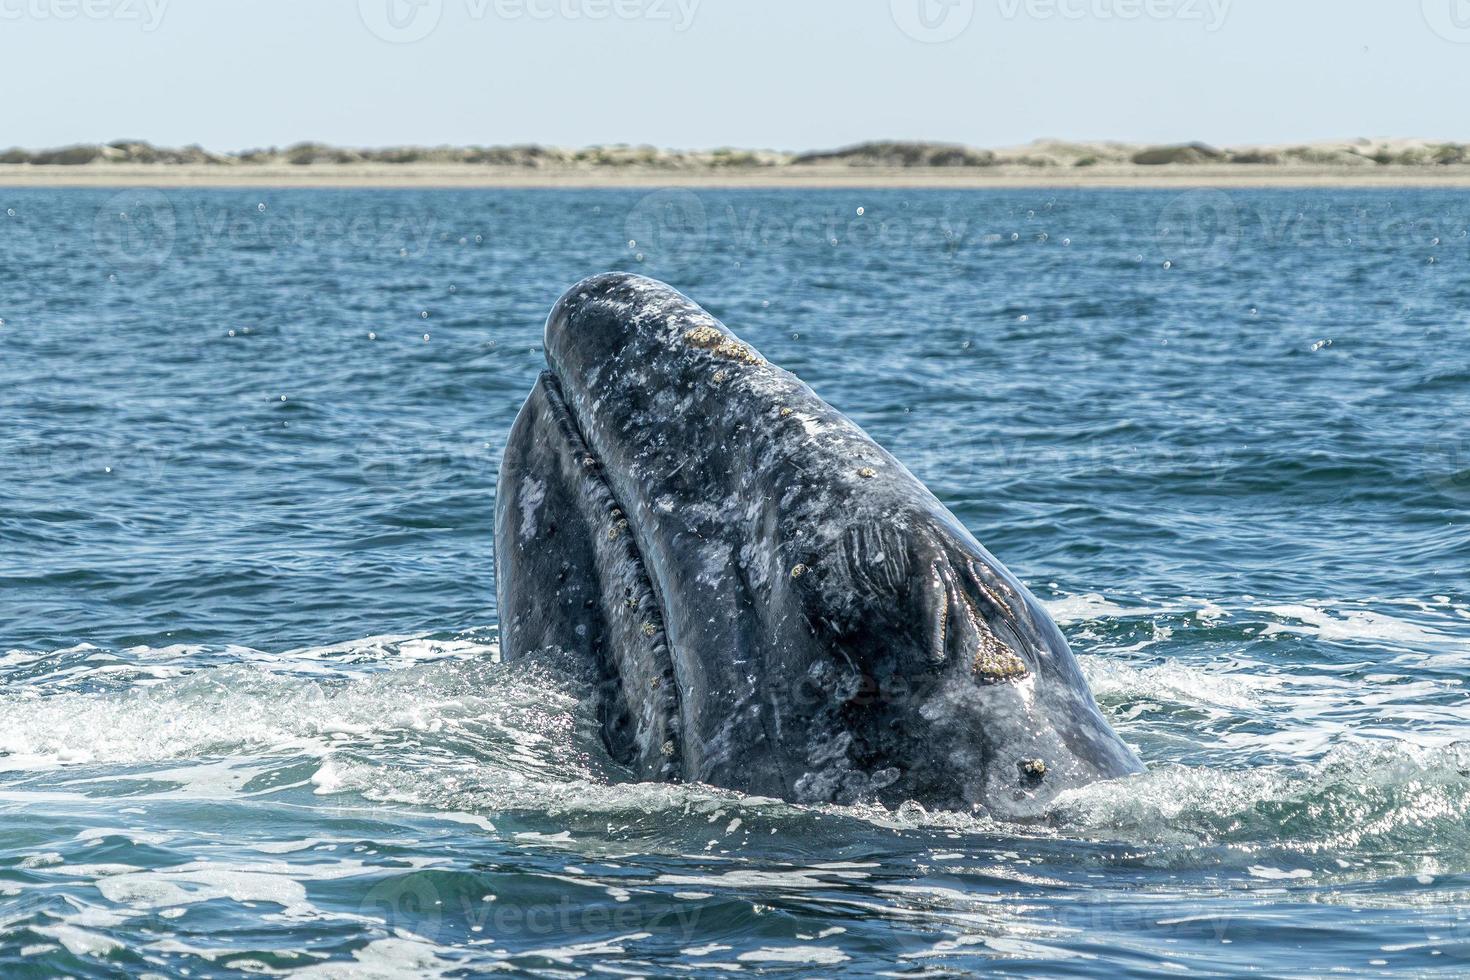 grey whale spy hopping near whalewatching boat in magdalena bay baja california photo